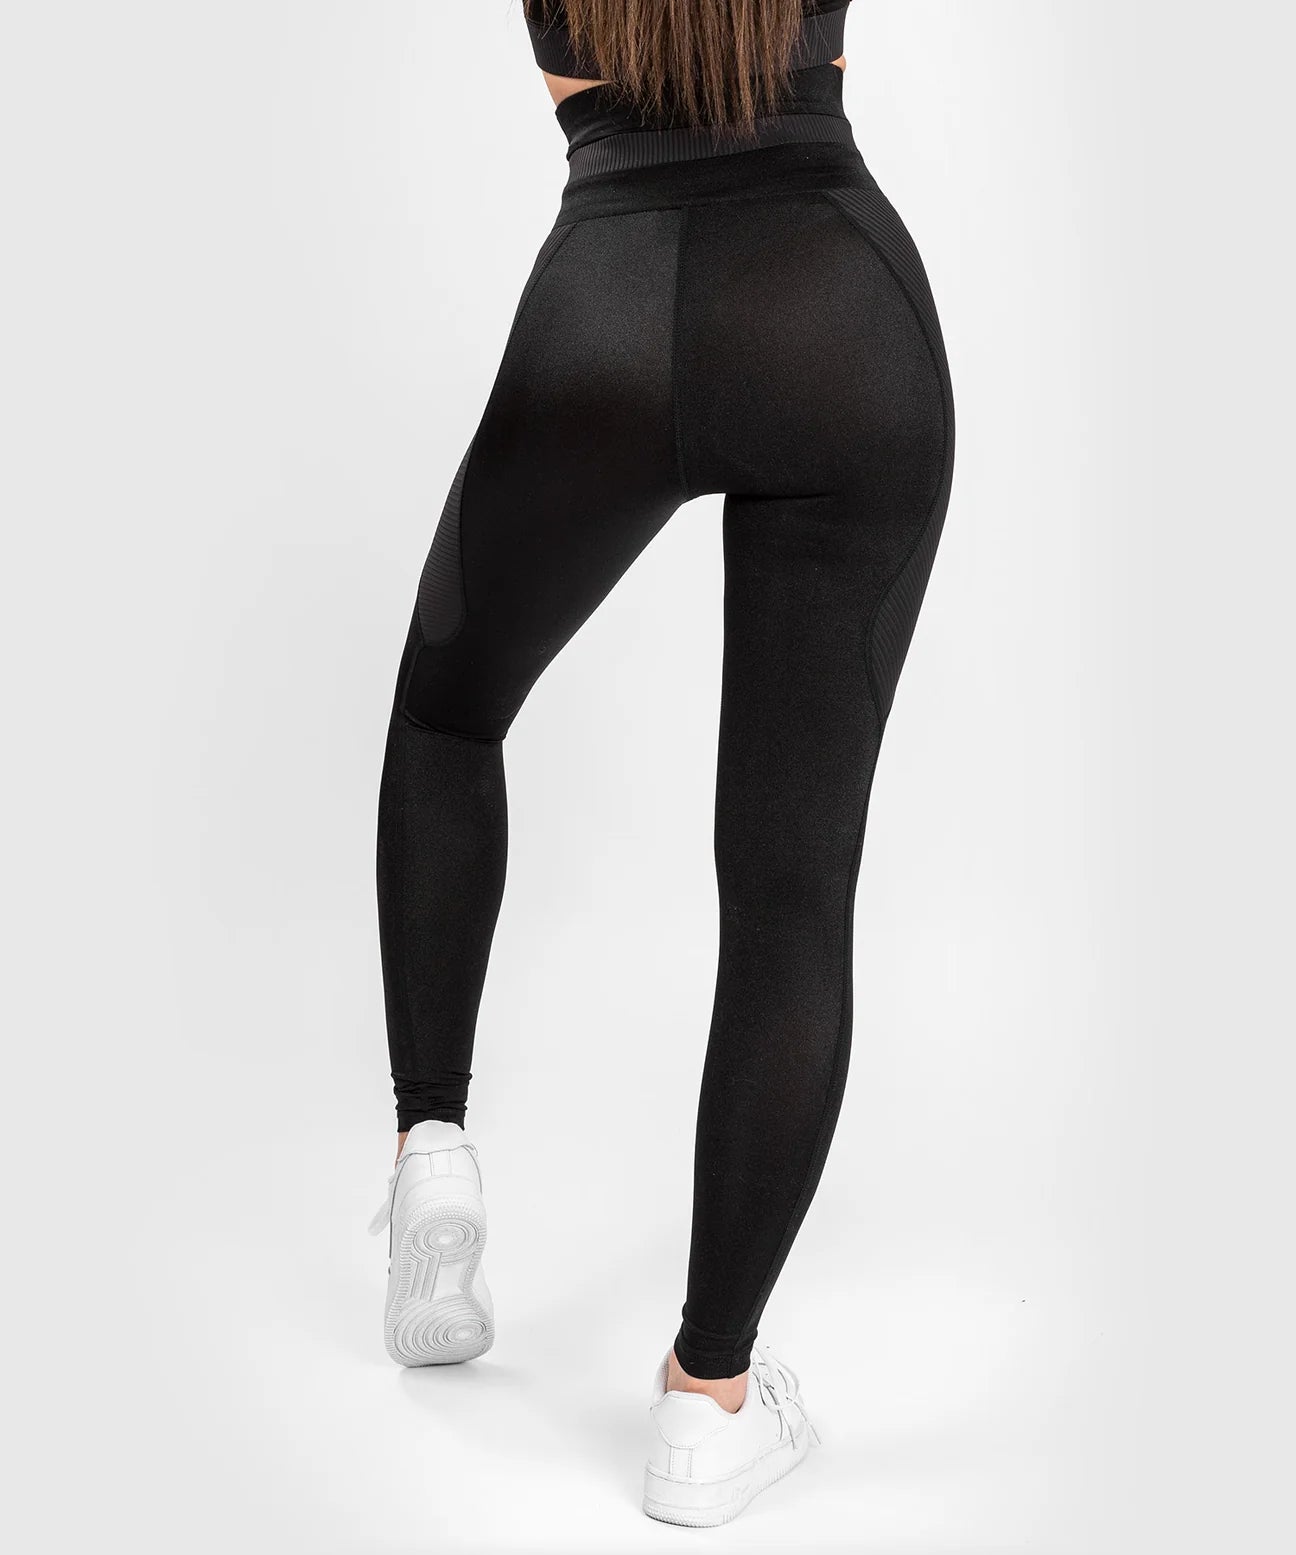 Venum Glow Leggings - Women's activewear essential. Back View